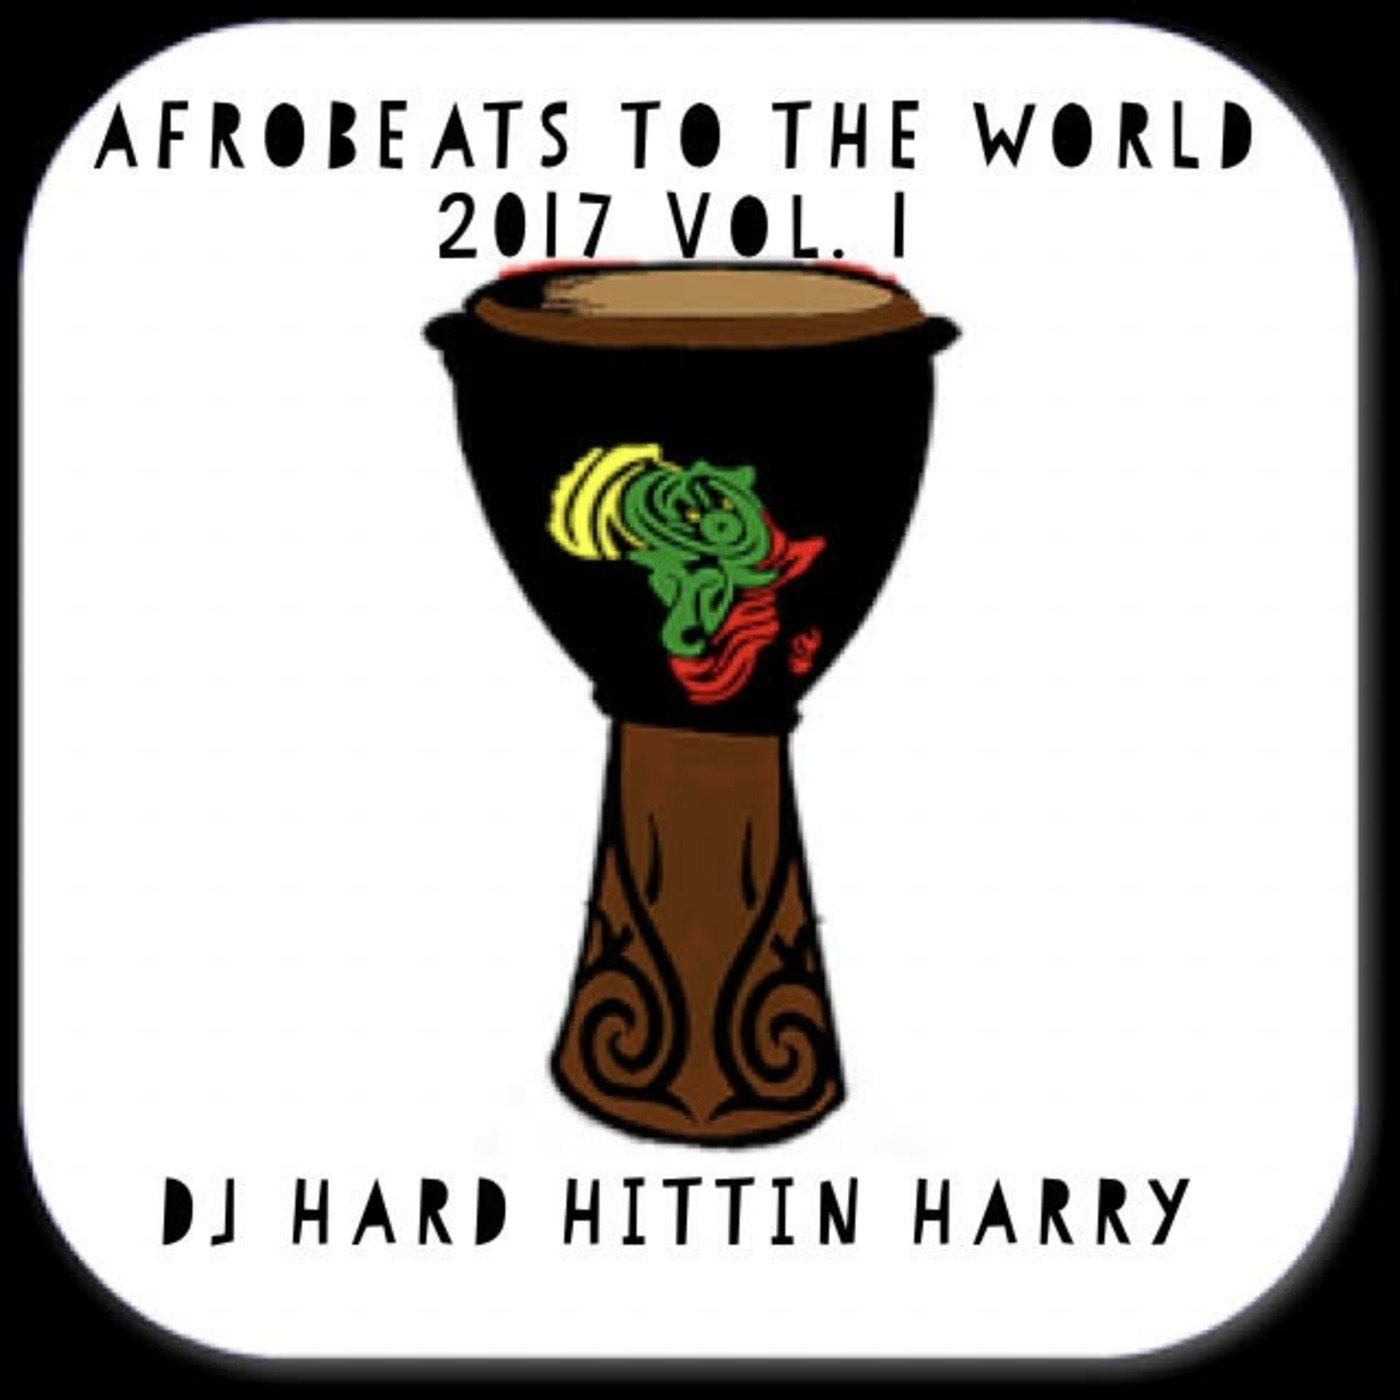 AFROBEATS TO THE WORLD 2017 MIX! VOL. 1 - DJ HARD HITTIN HARRY (Haitian All-StarZ)Episode 146